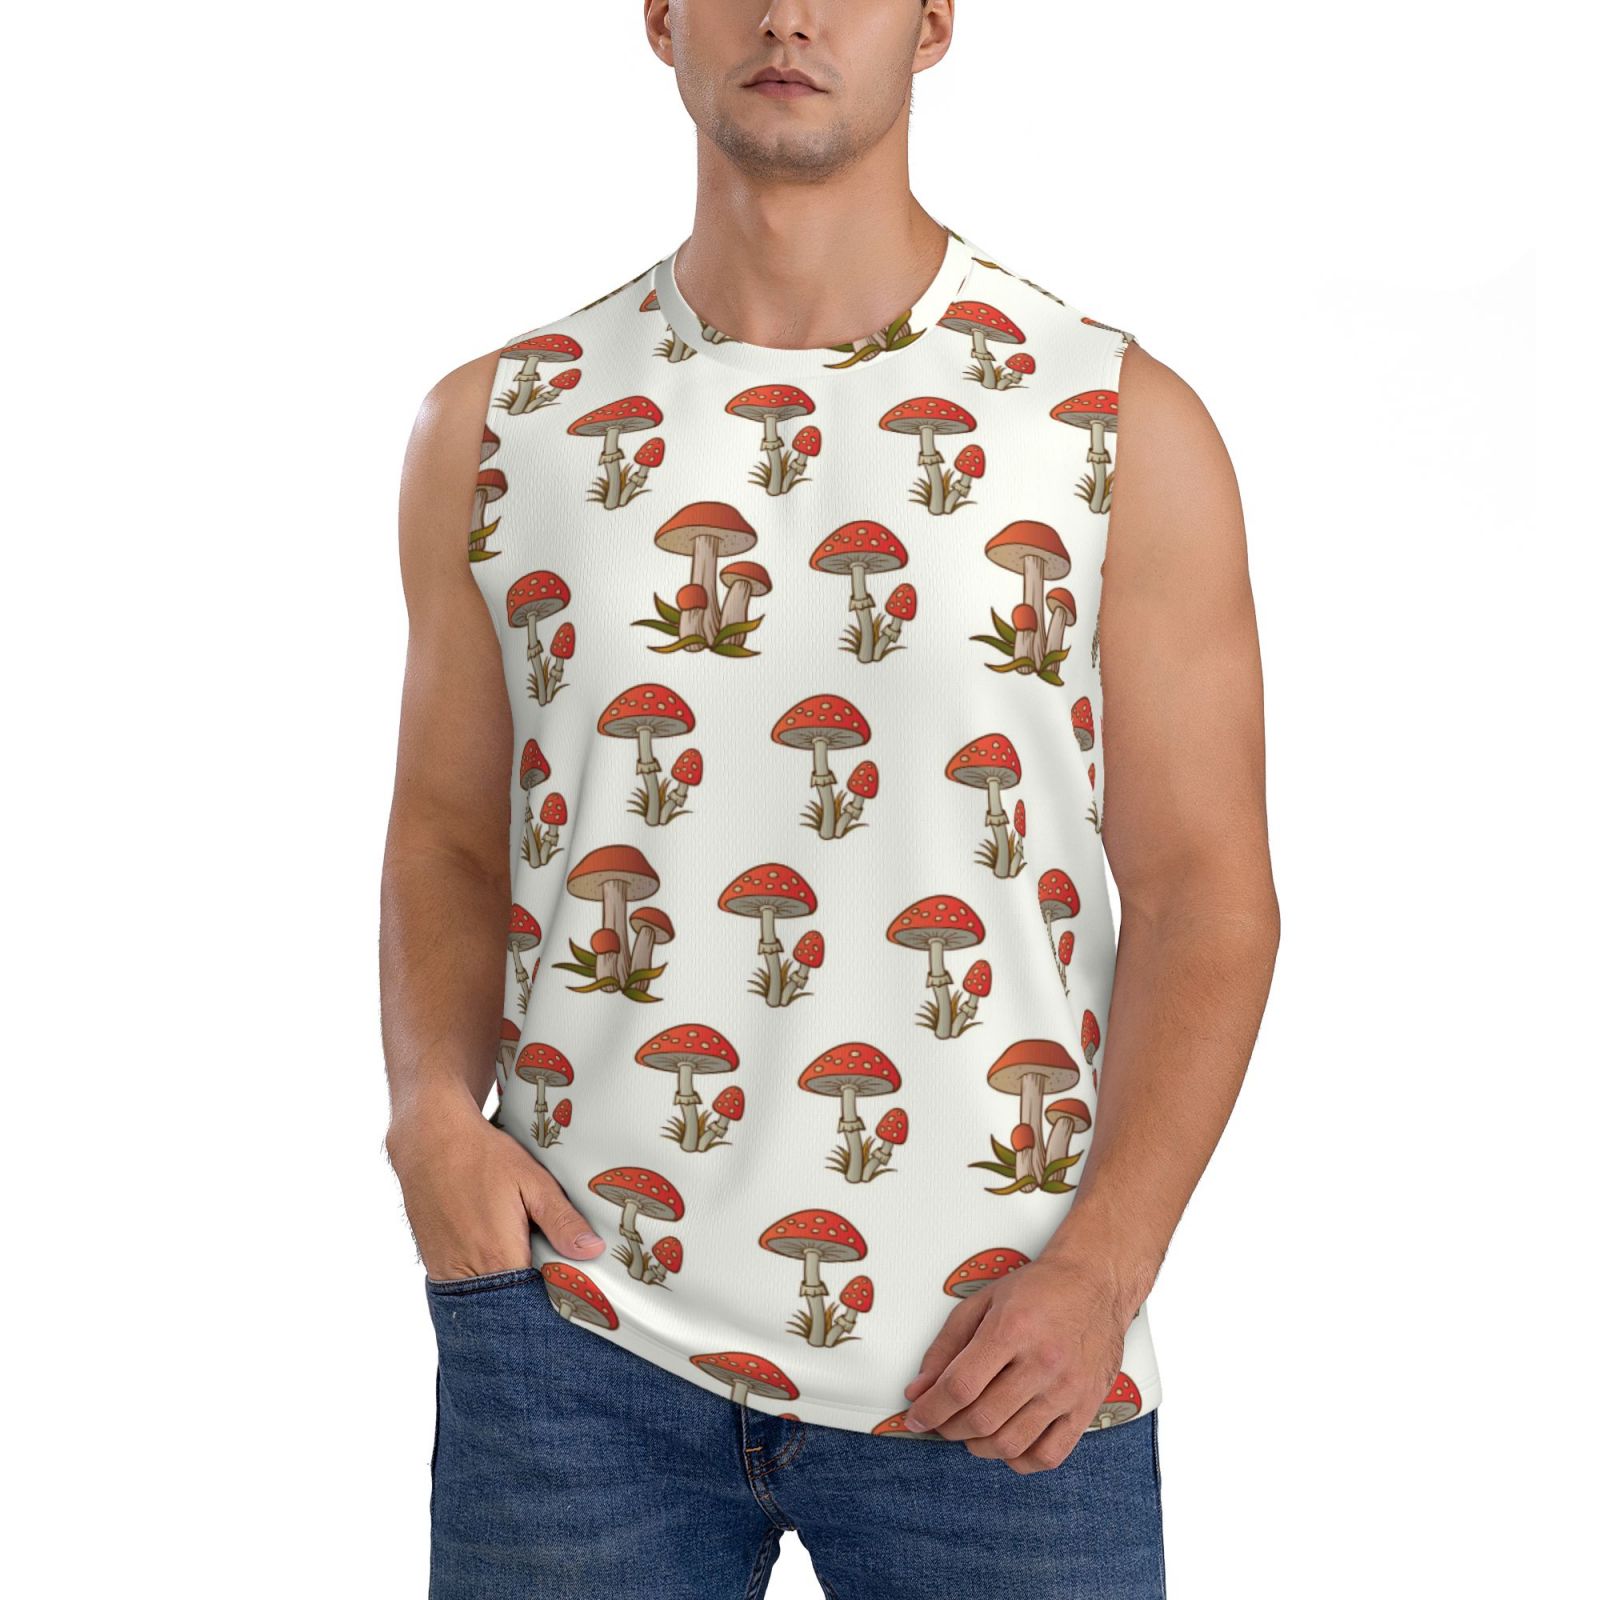 Coaee Mushroom Men's Sleeveless T-Shirt with Quick Dry for Fitness ...